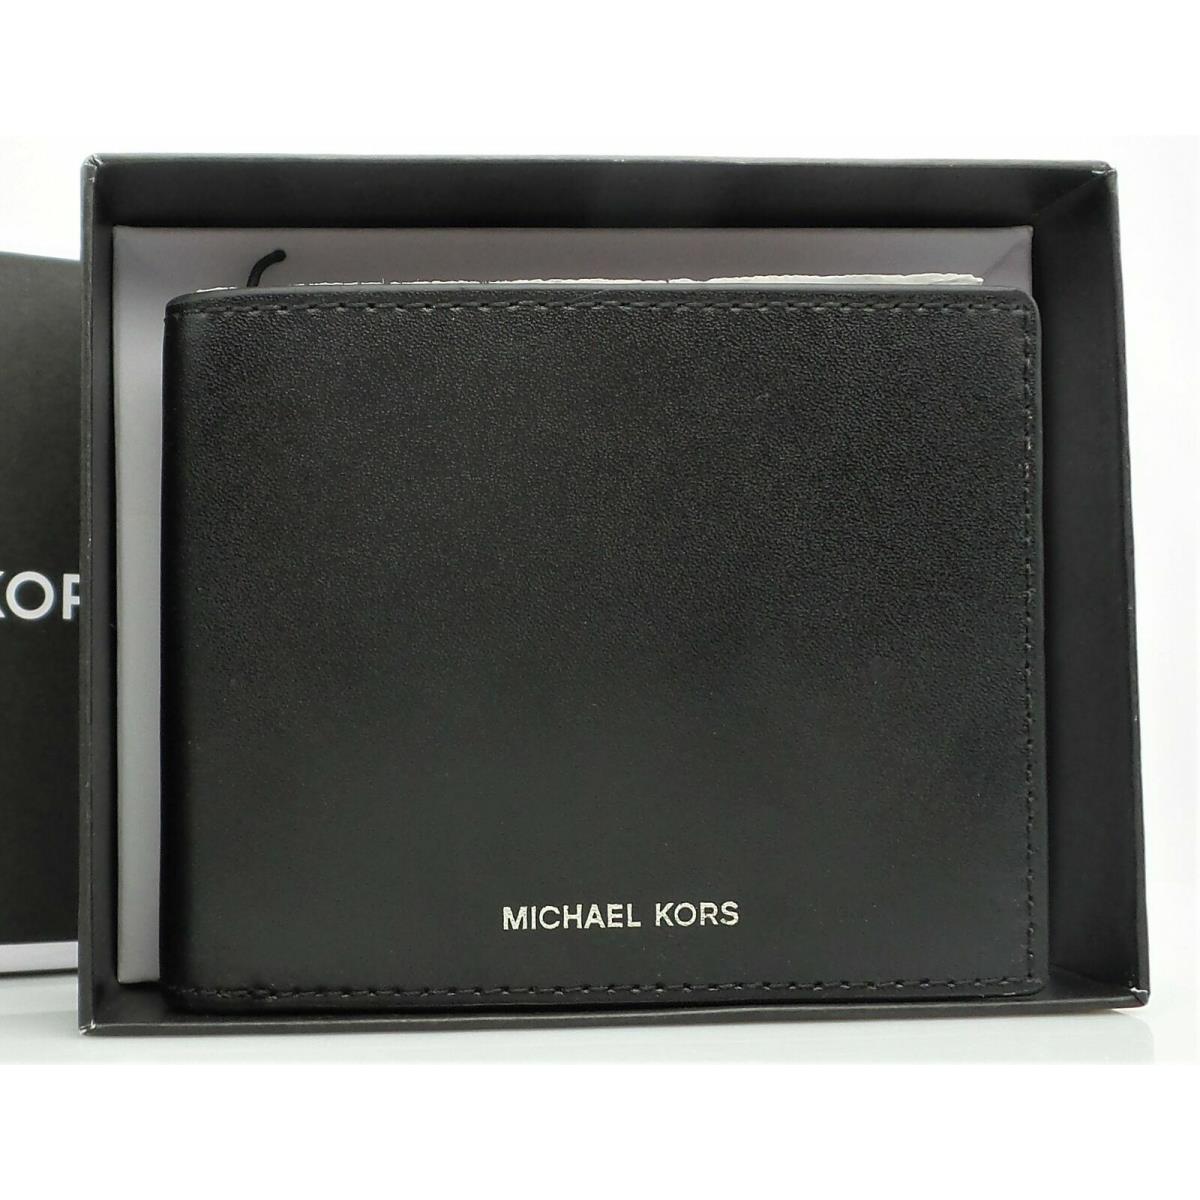 Michael Kors wallet  - Black